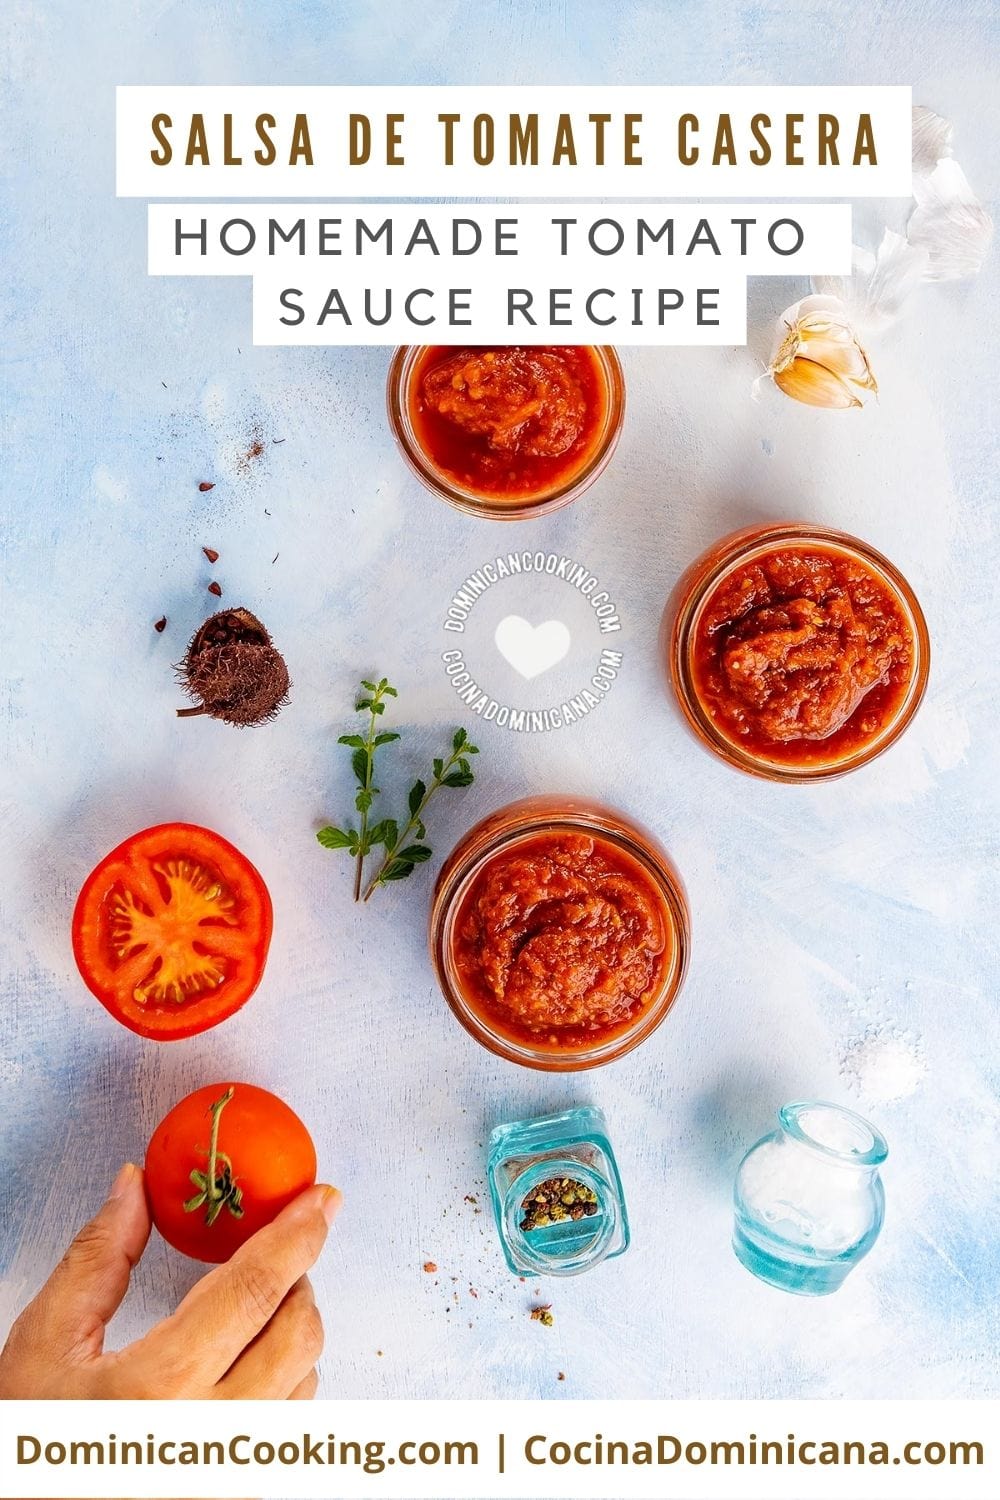 Homemade tomato sauce recipe.